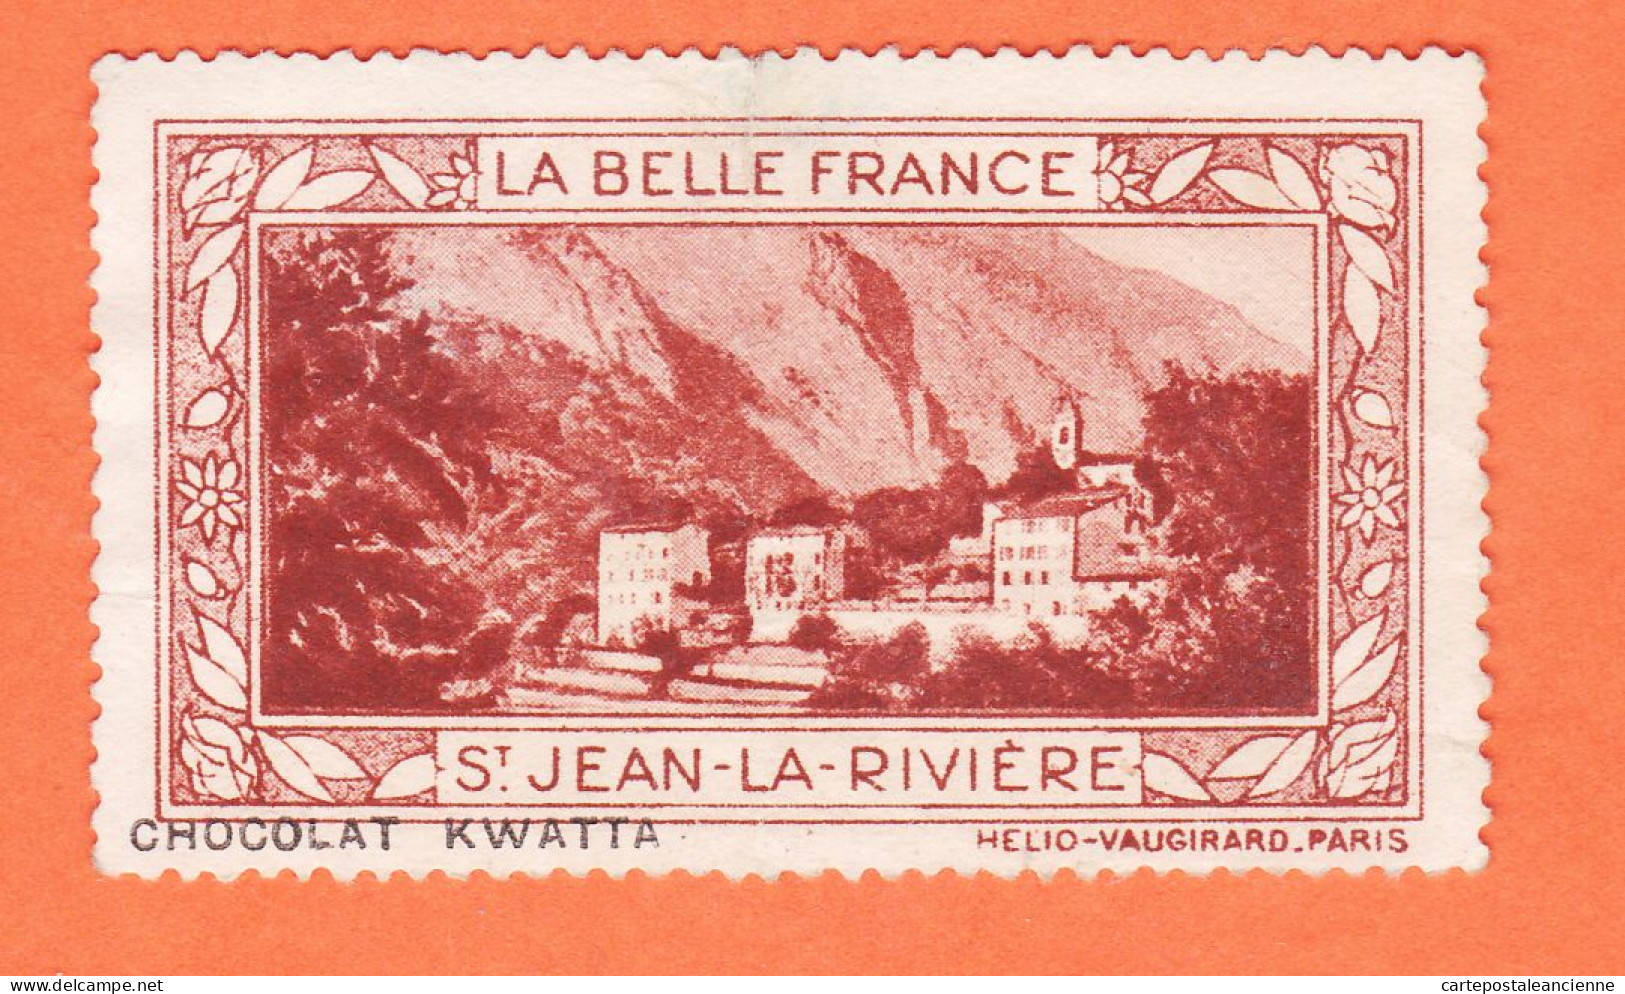 05431 / ⭐ ◉ SAINT-JEAN-RIVIERE 06-Alpes Maritimes Pub Chocolat KWATTA Vignette Collection BELLE FRANCE HELIO-VAUGIRARD - Turismo (Viñetas)